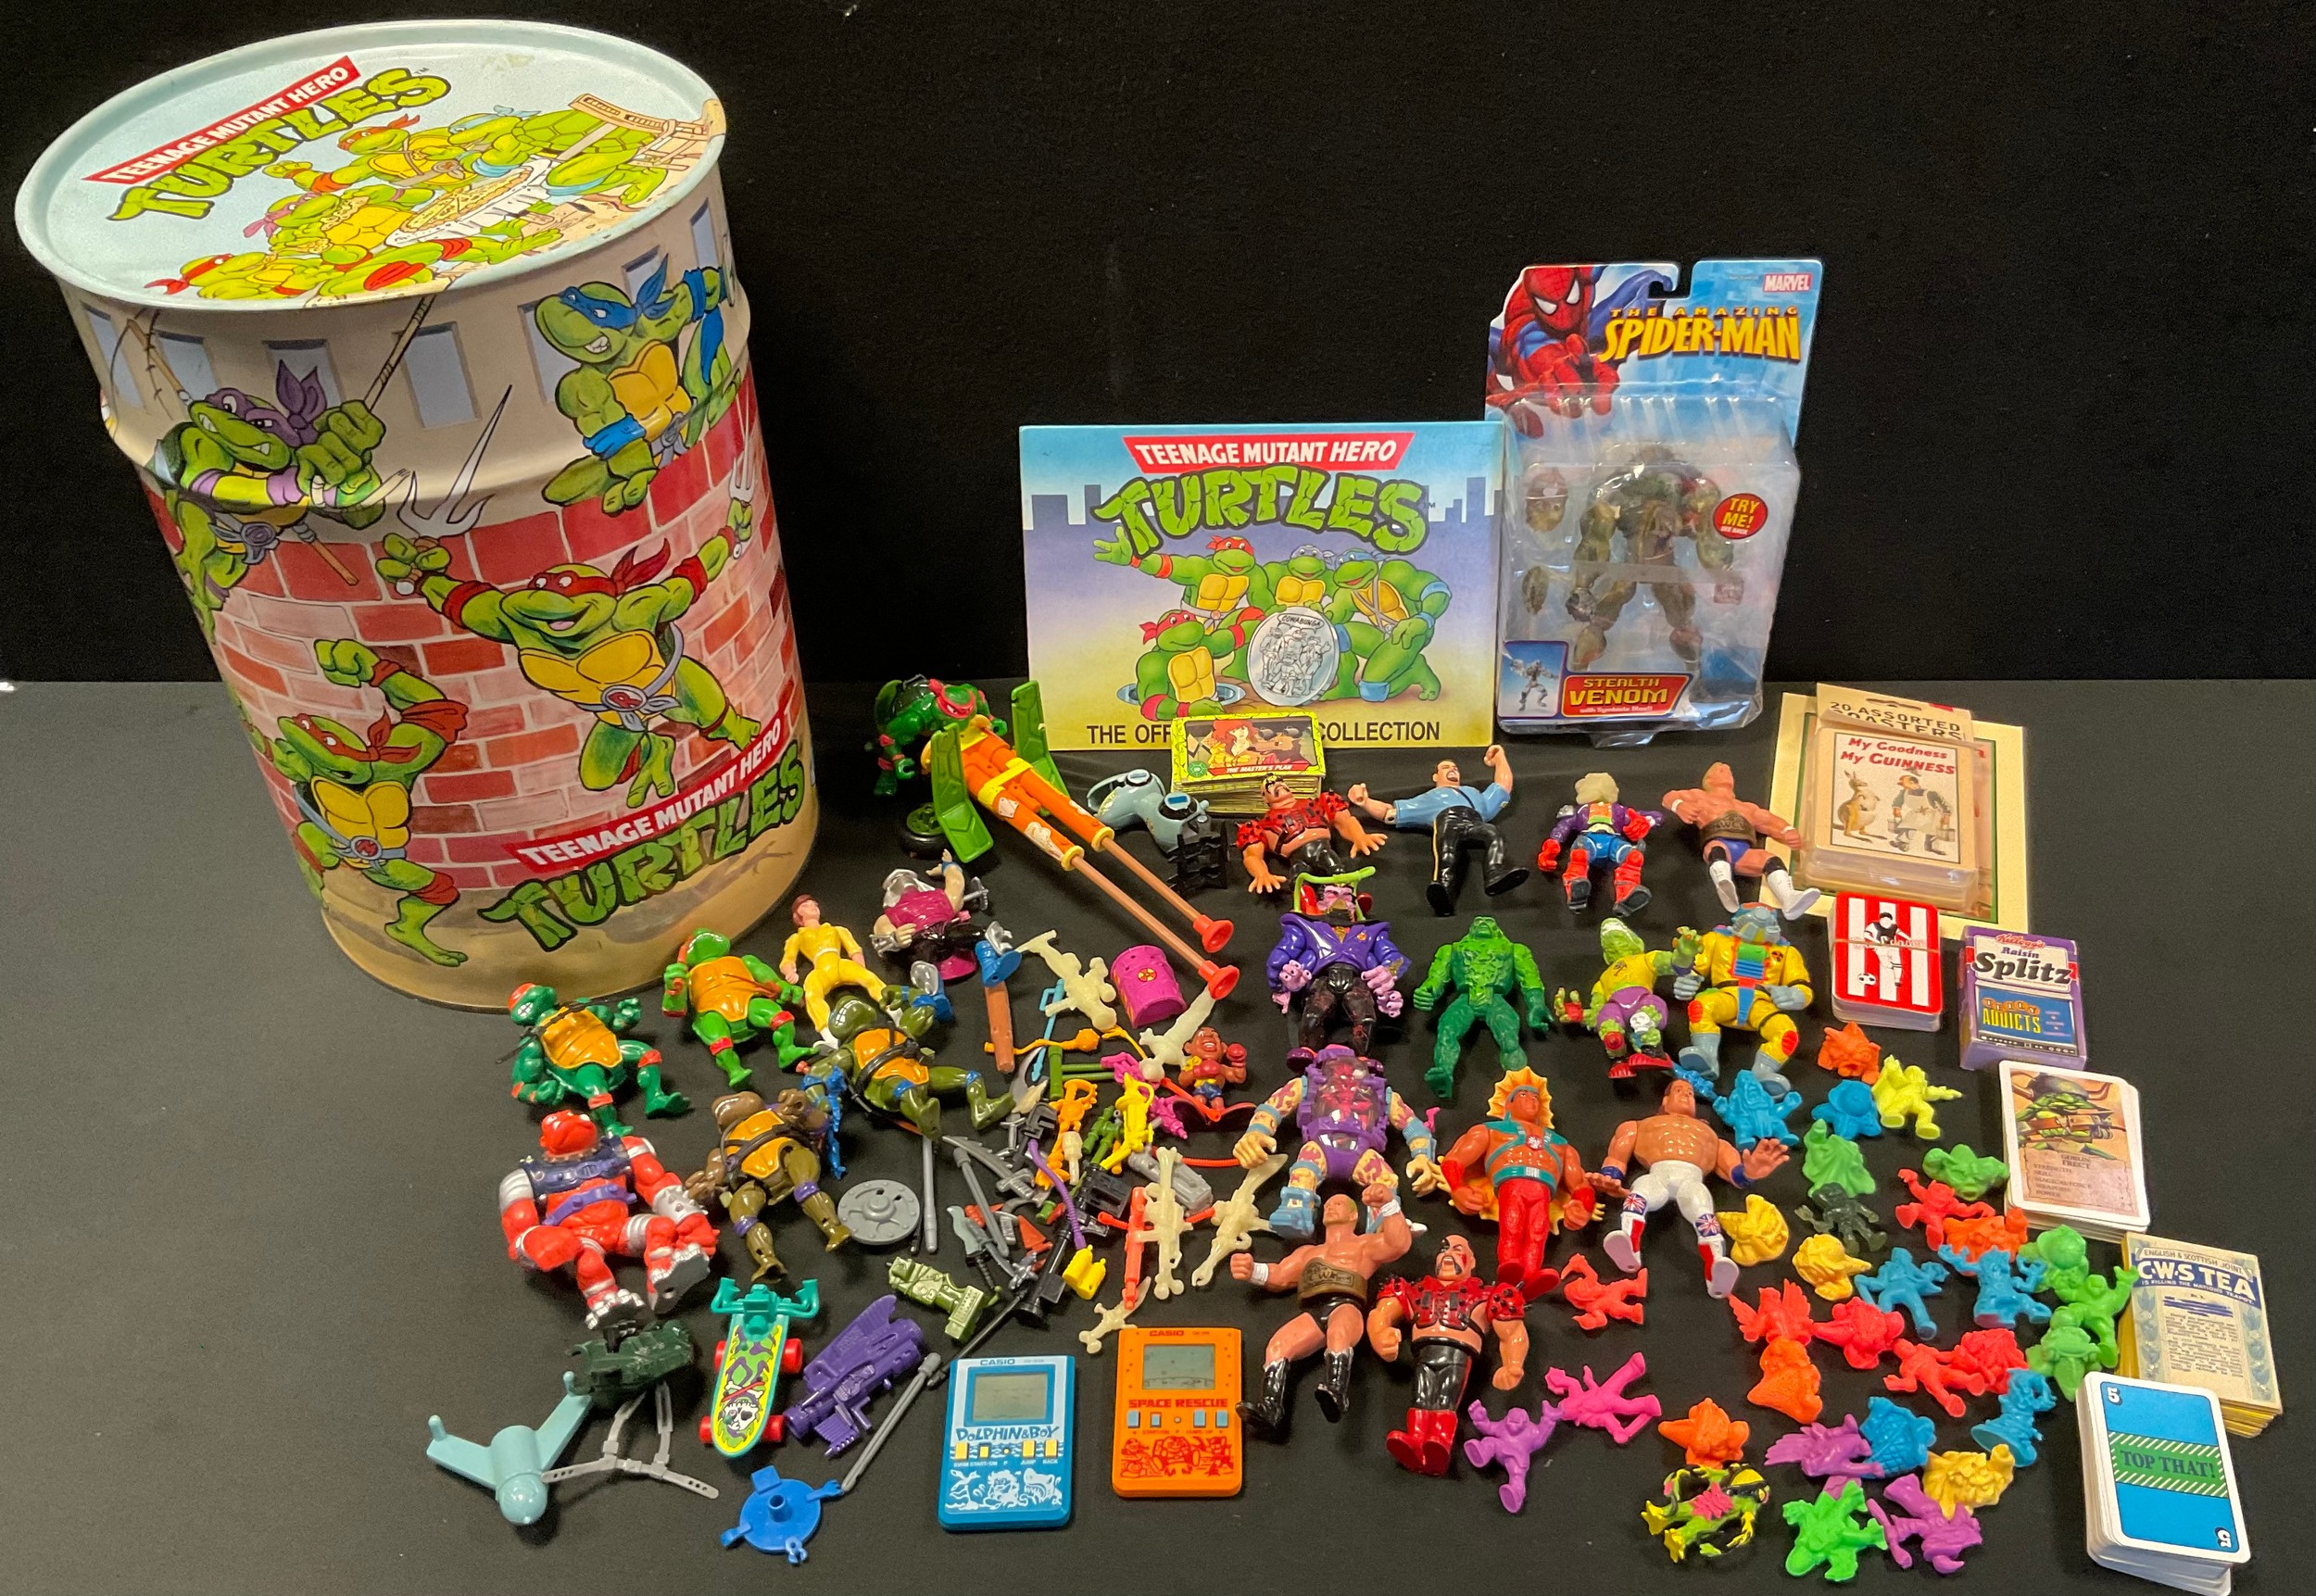 Toys -Teenage Mutant Ninja Turtles playmates models/figures; a storage bin; collectors medals; etc.